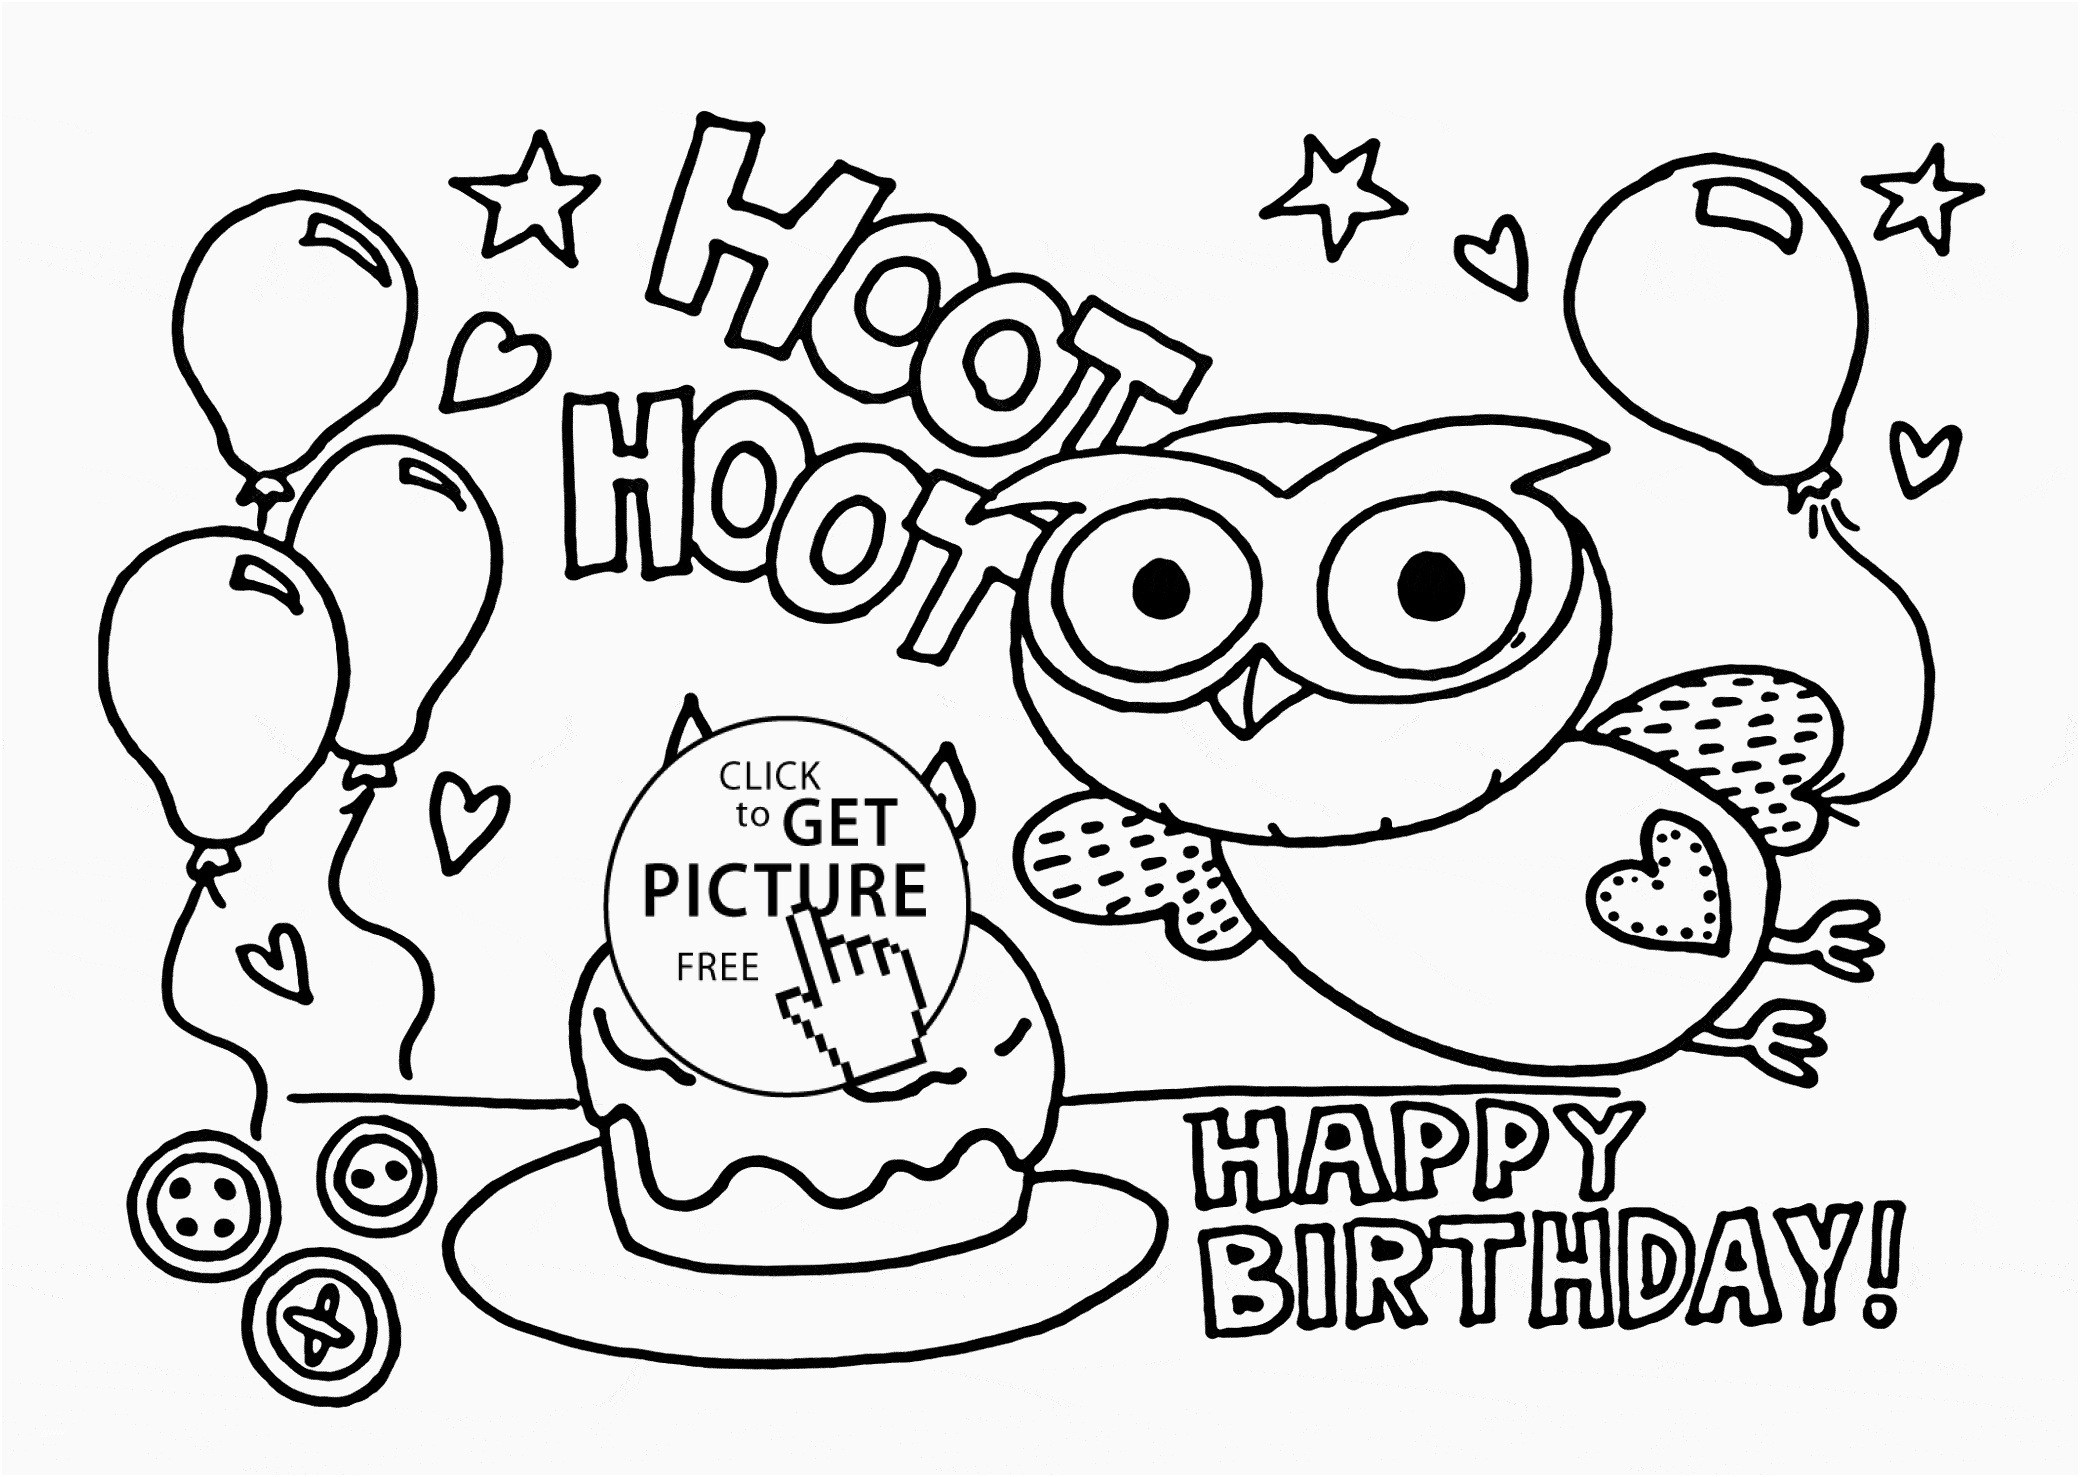 15 Inspirational Free Printable Humorous Birthday Cards | Goldworld - Free Printable Humorous Birthday Cards